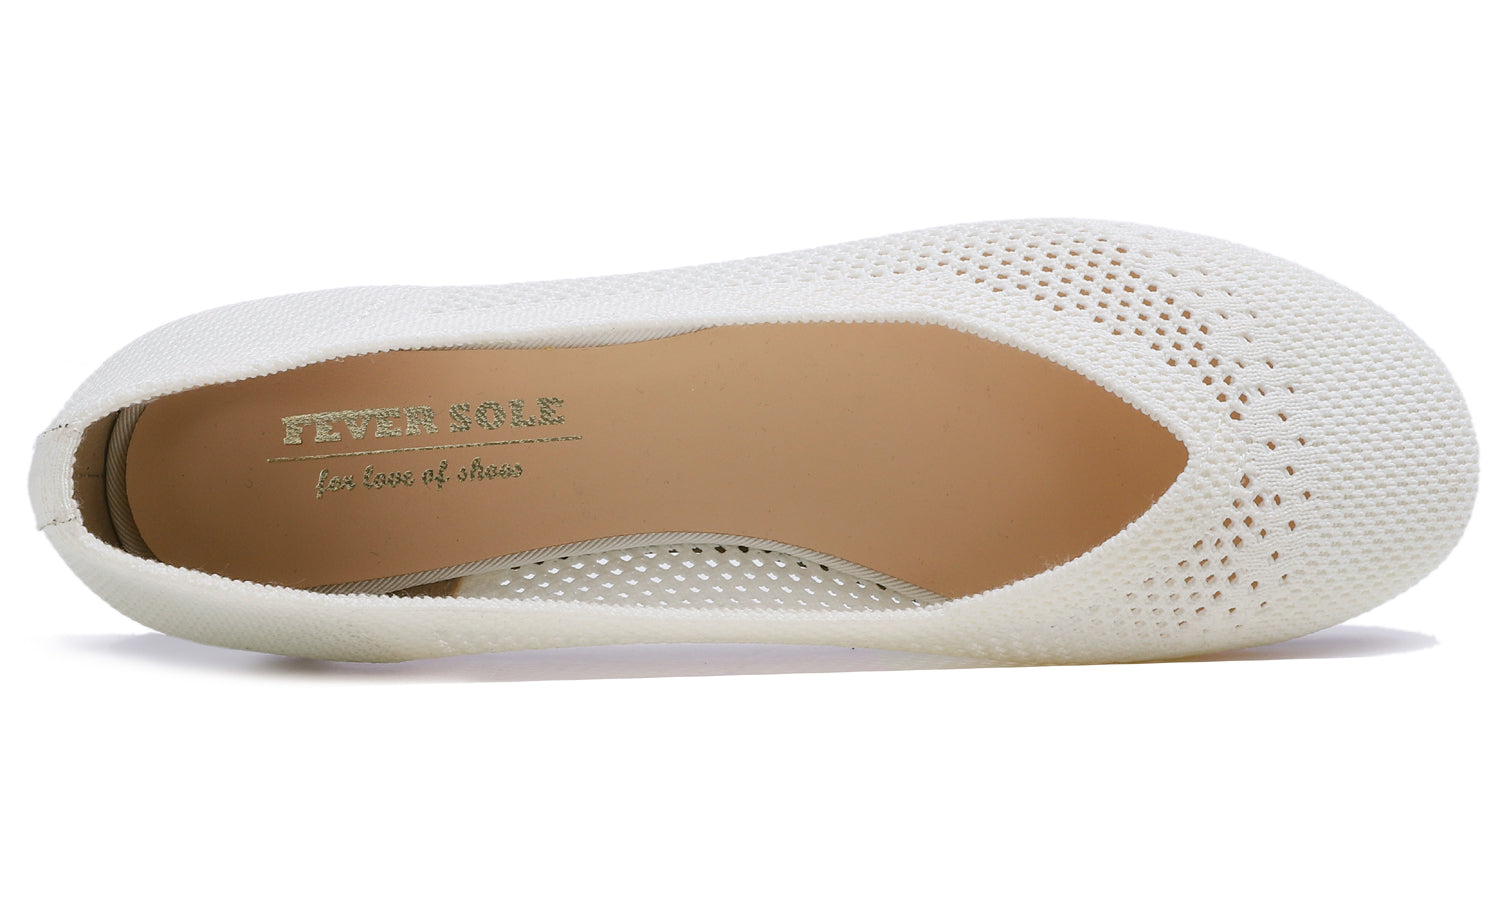 Feversole Women's Woven Fashion Breathable Knit Flat Shoes Cream White Ballet